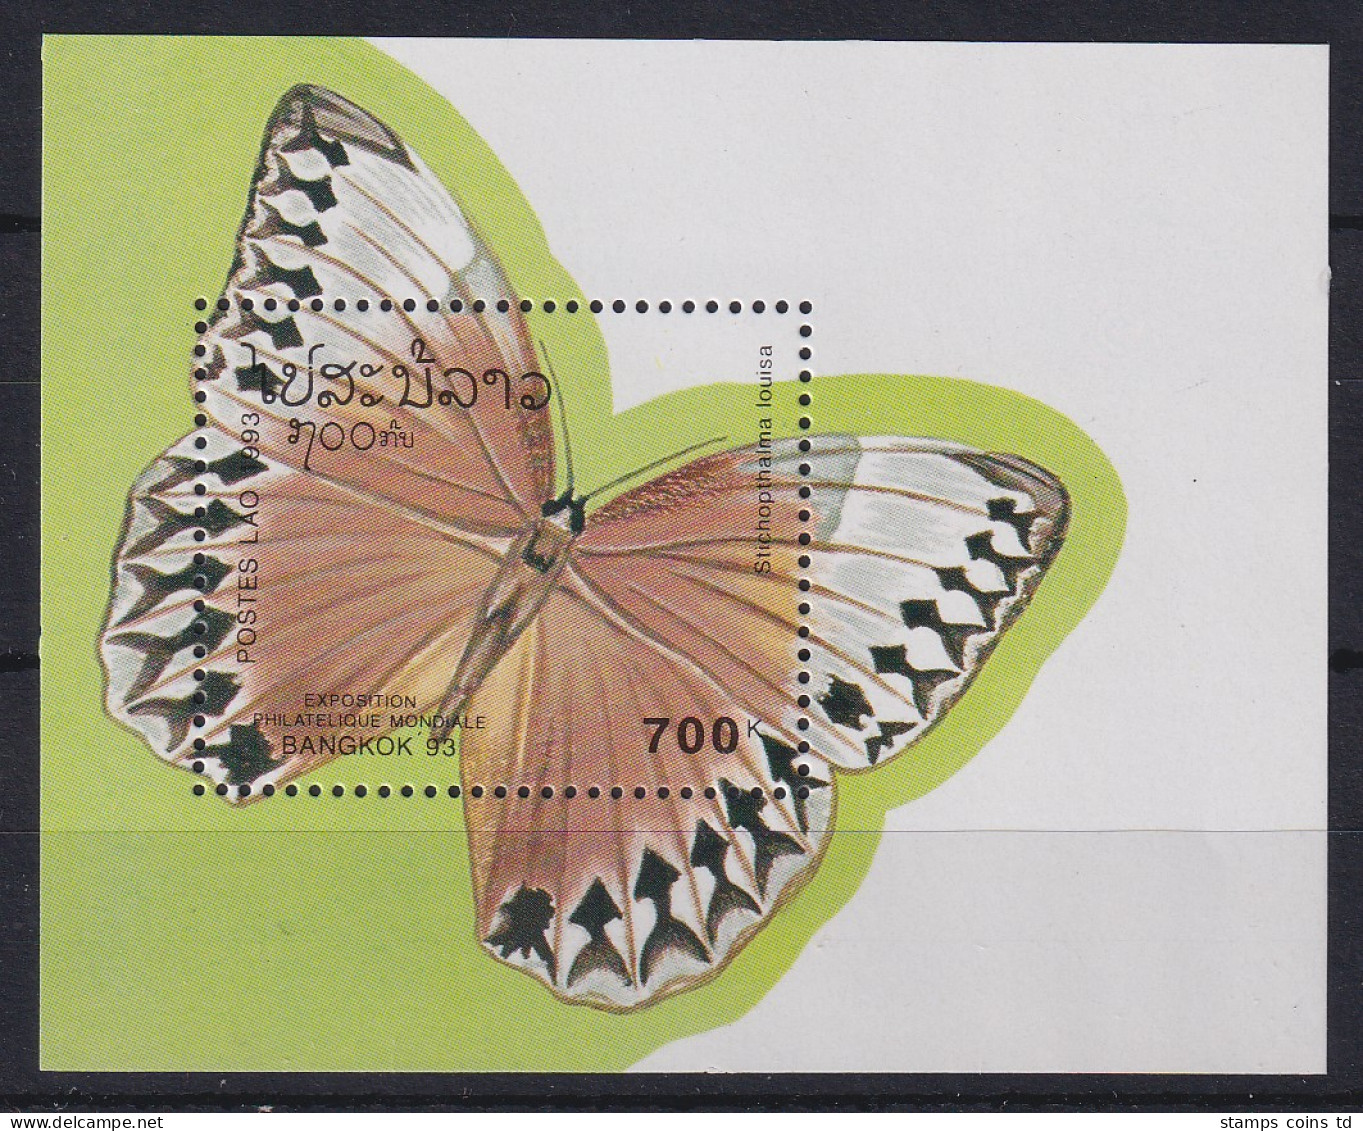 Laos 1993 Schmetterling Mi.-Nr. Block 146 Postfrisch **  - Laos